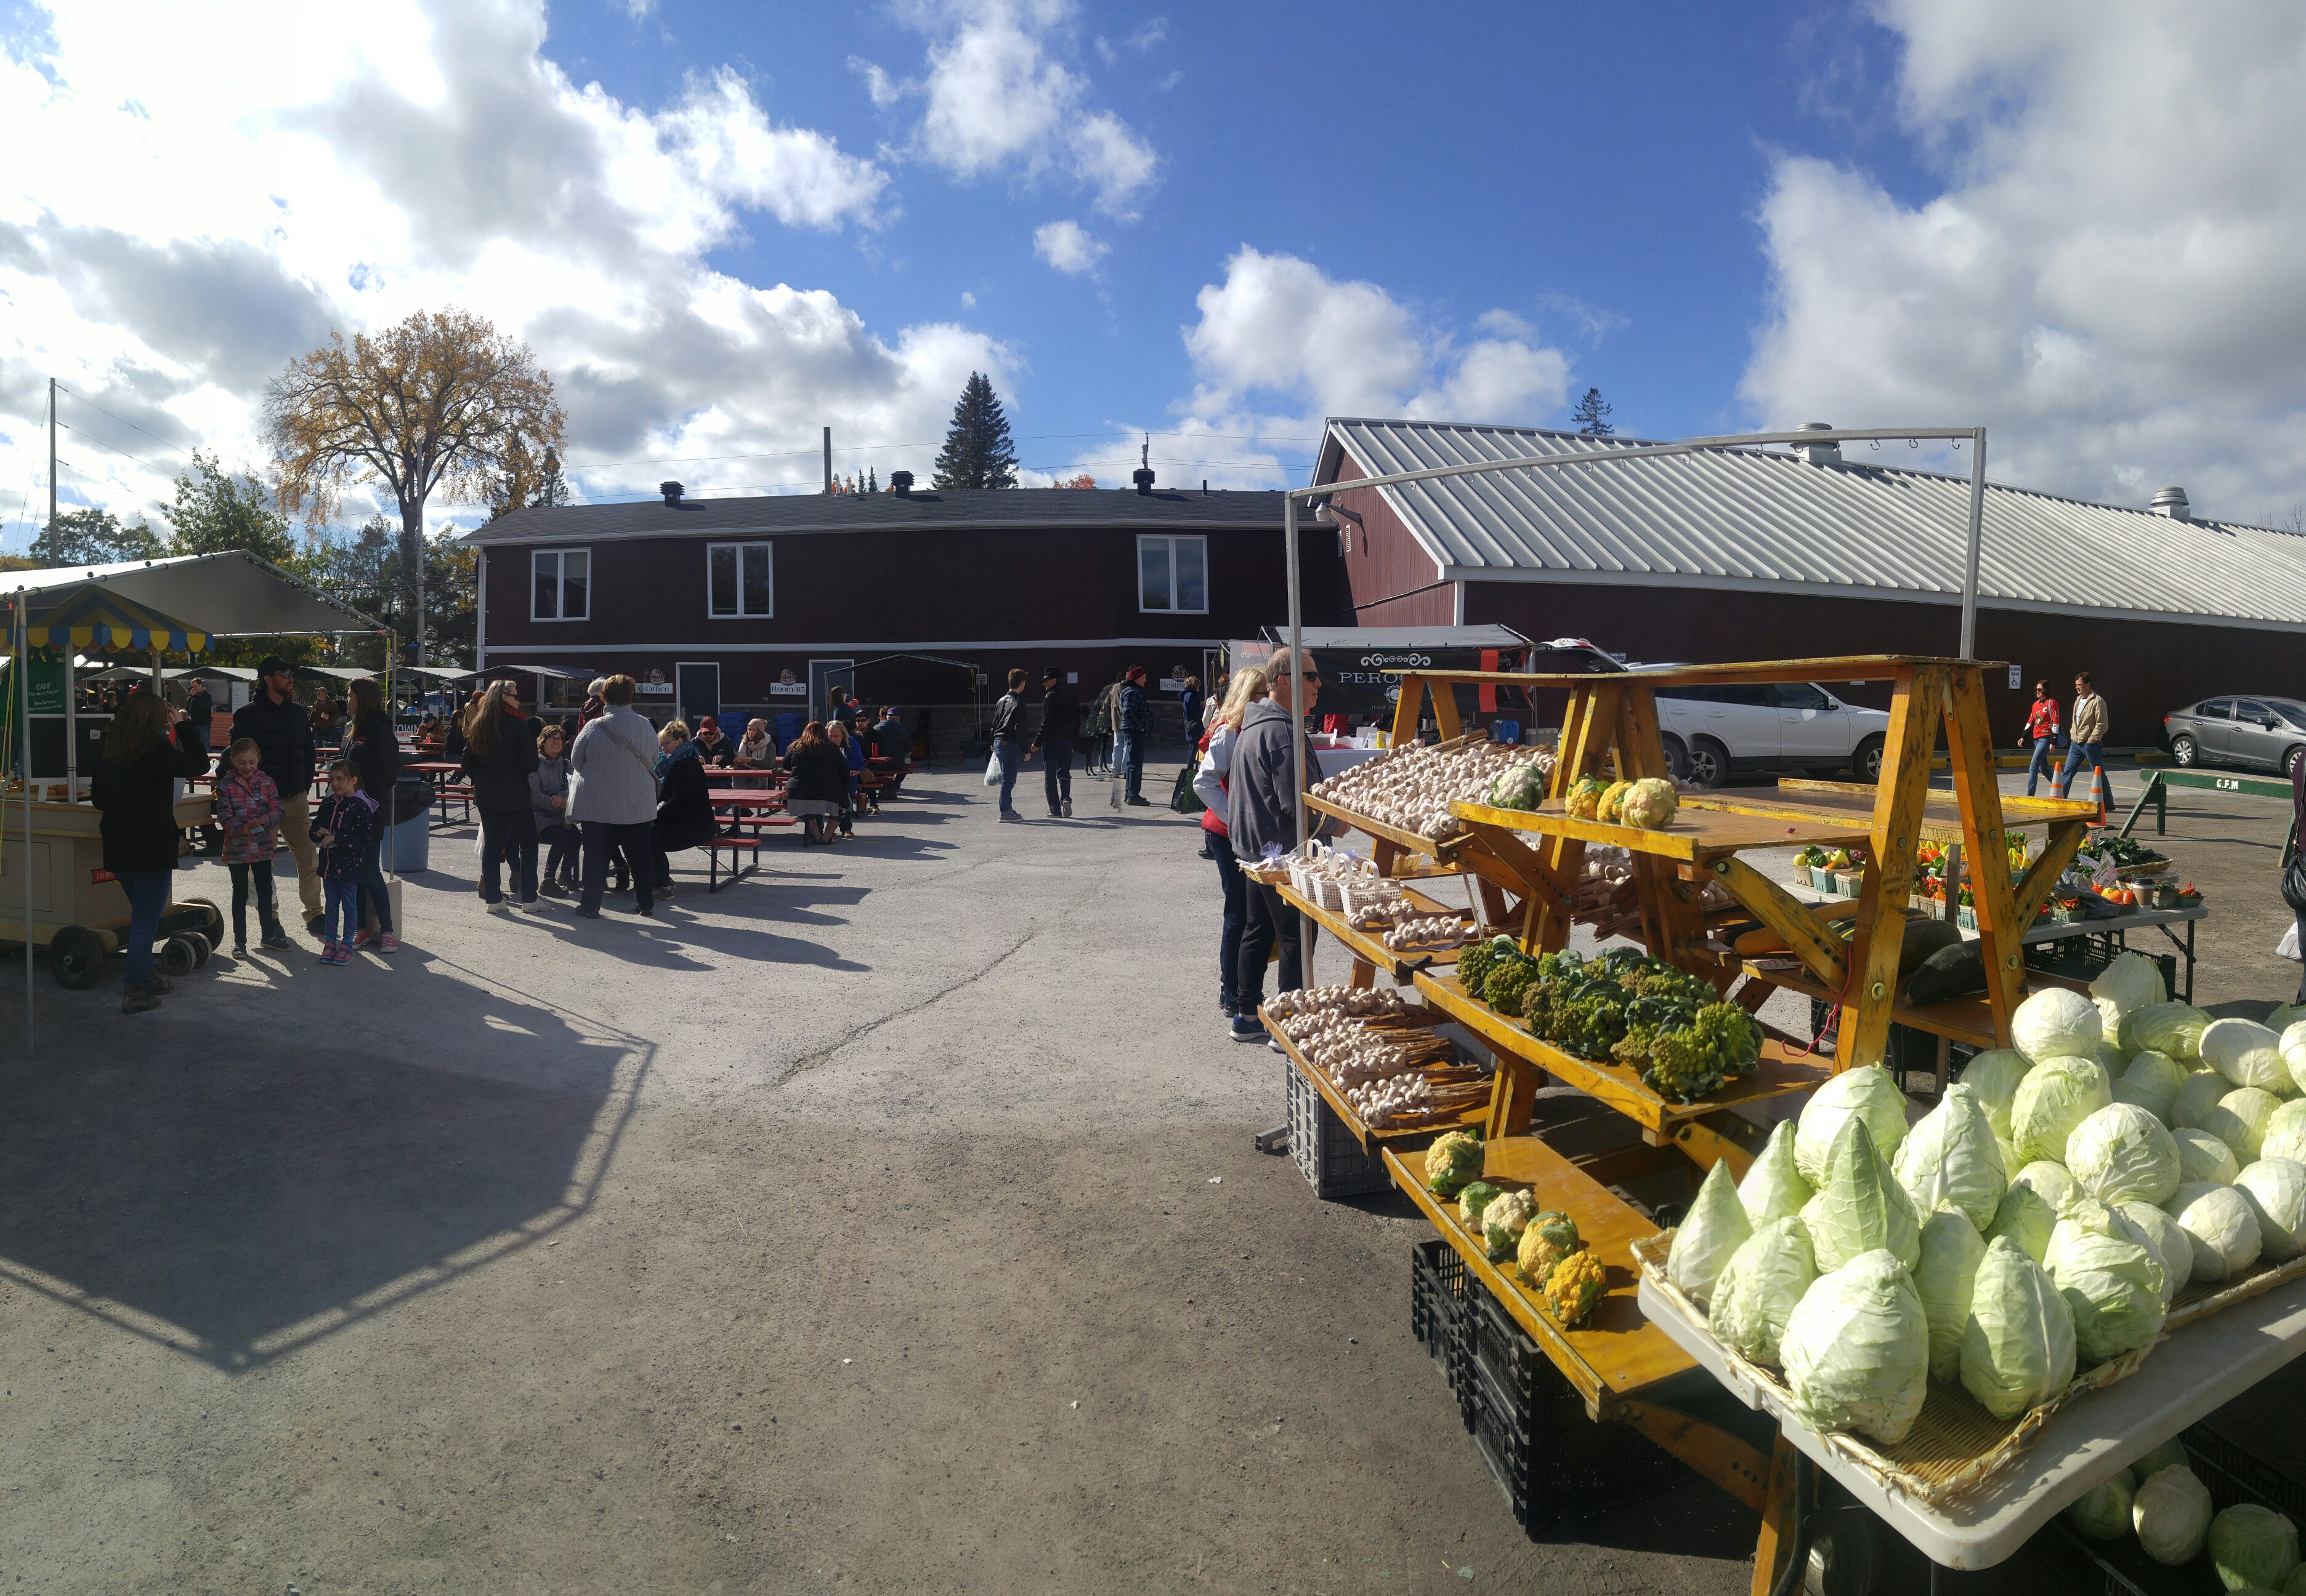 A beautiful Saturday at the Carp Farmers' Market. Photo by Jake Davies